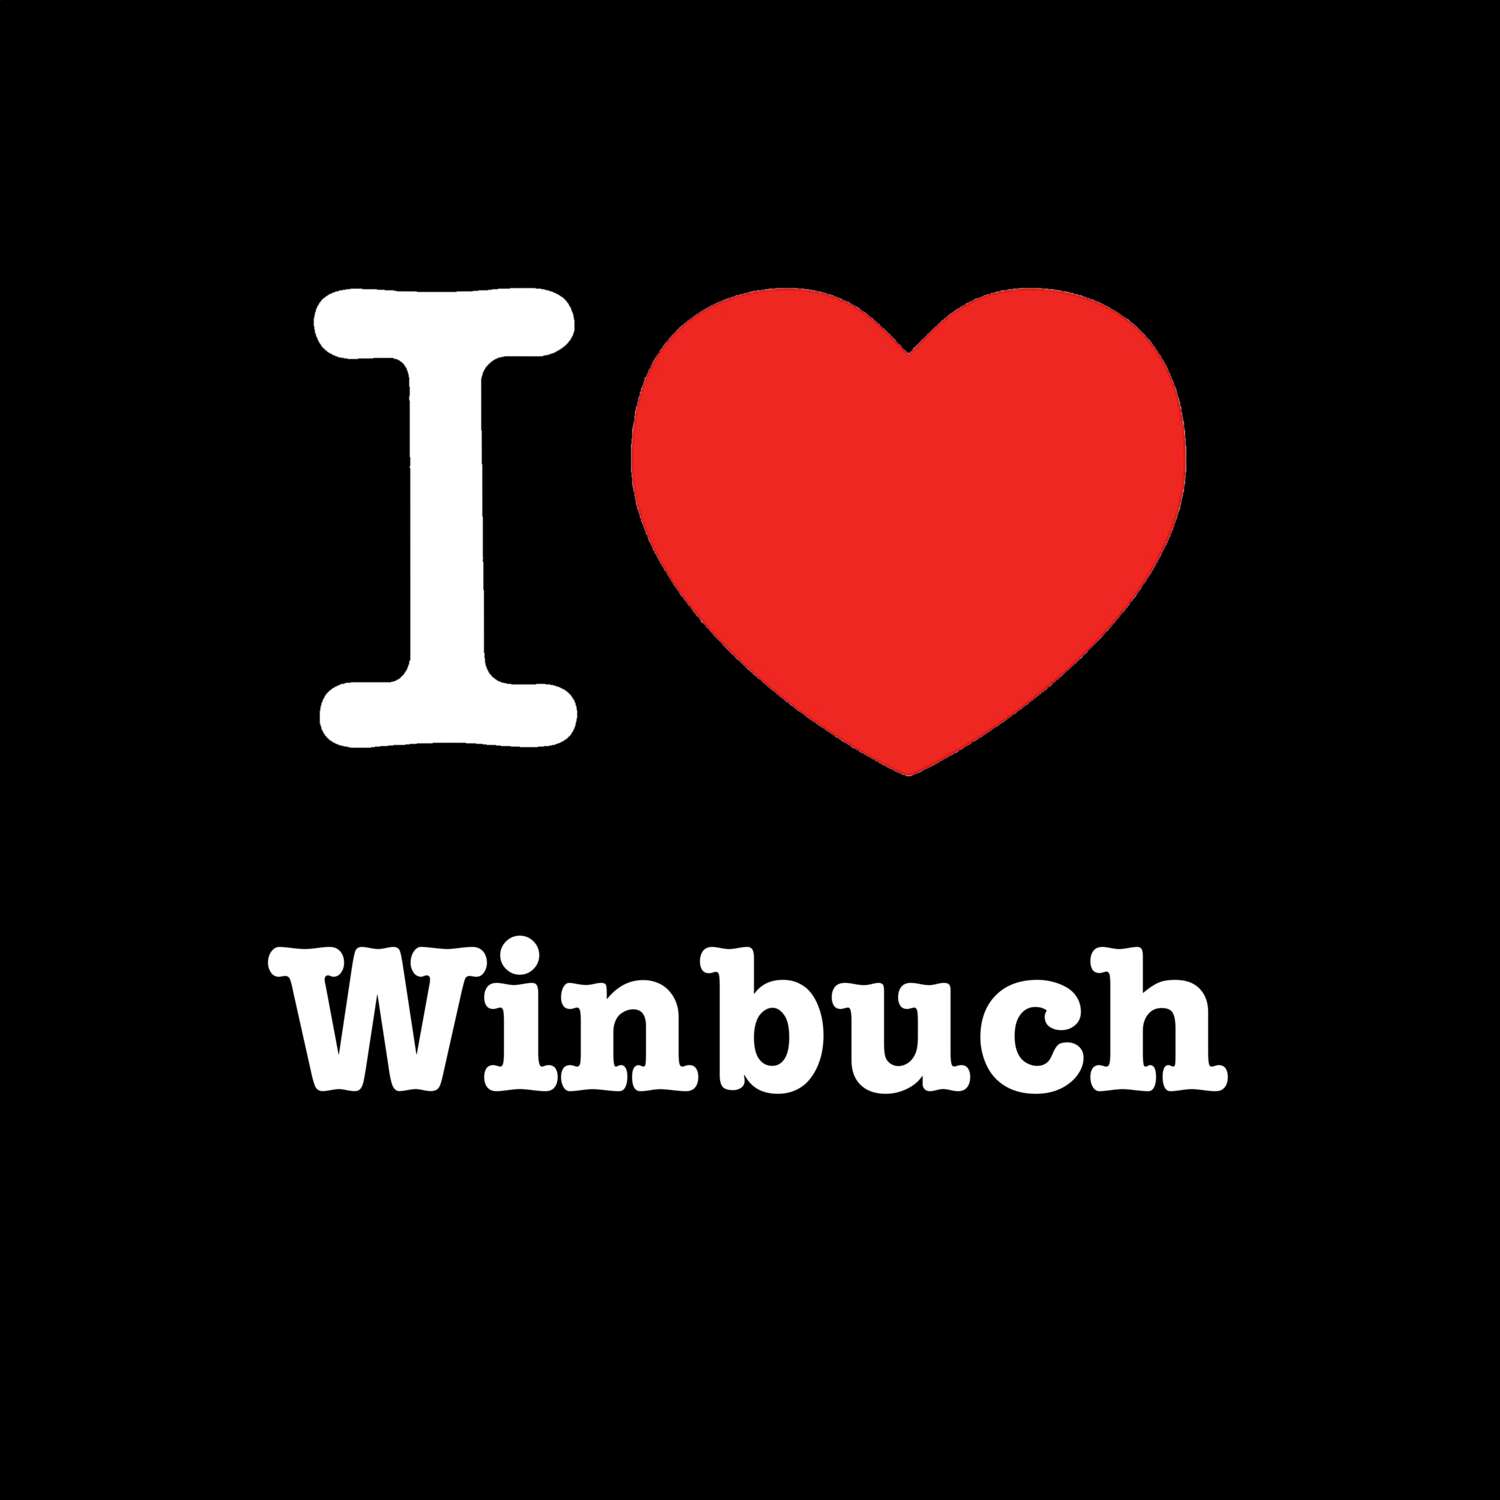 Winbuch T-Shirt »I love«